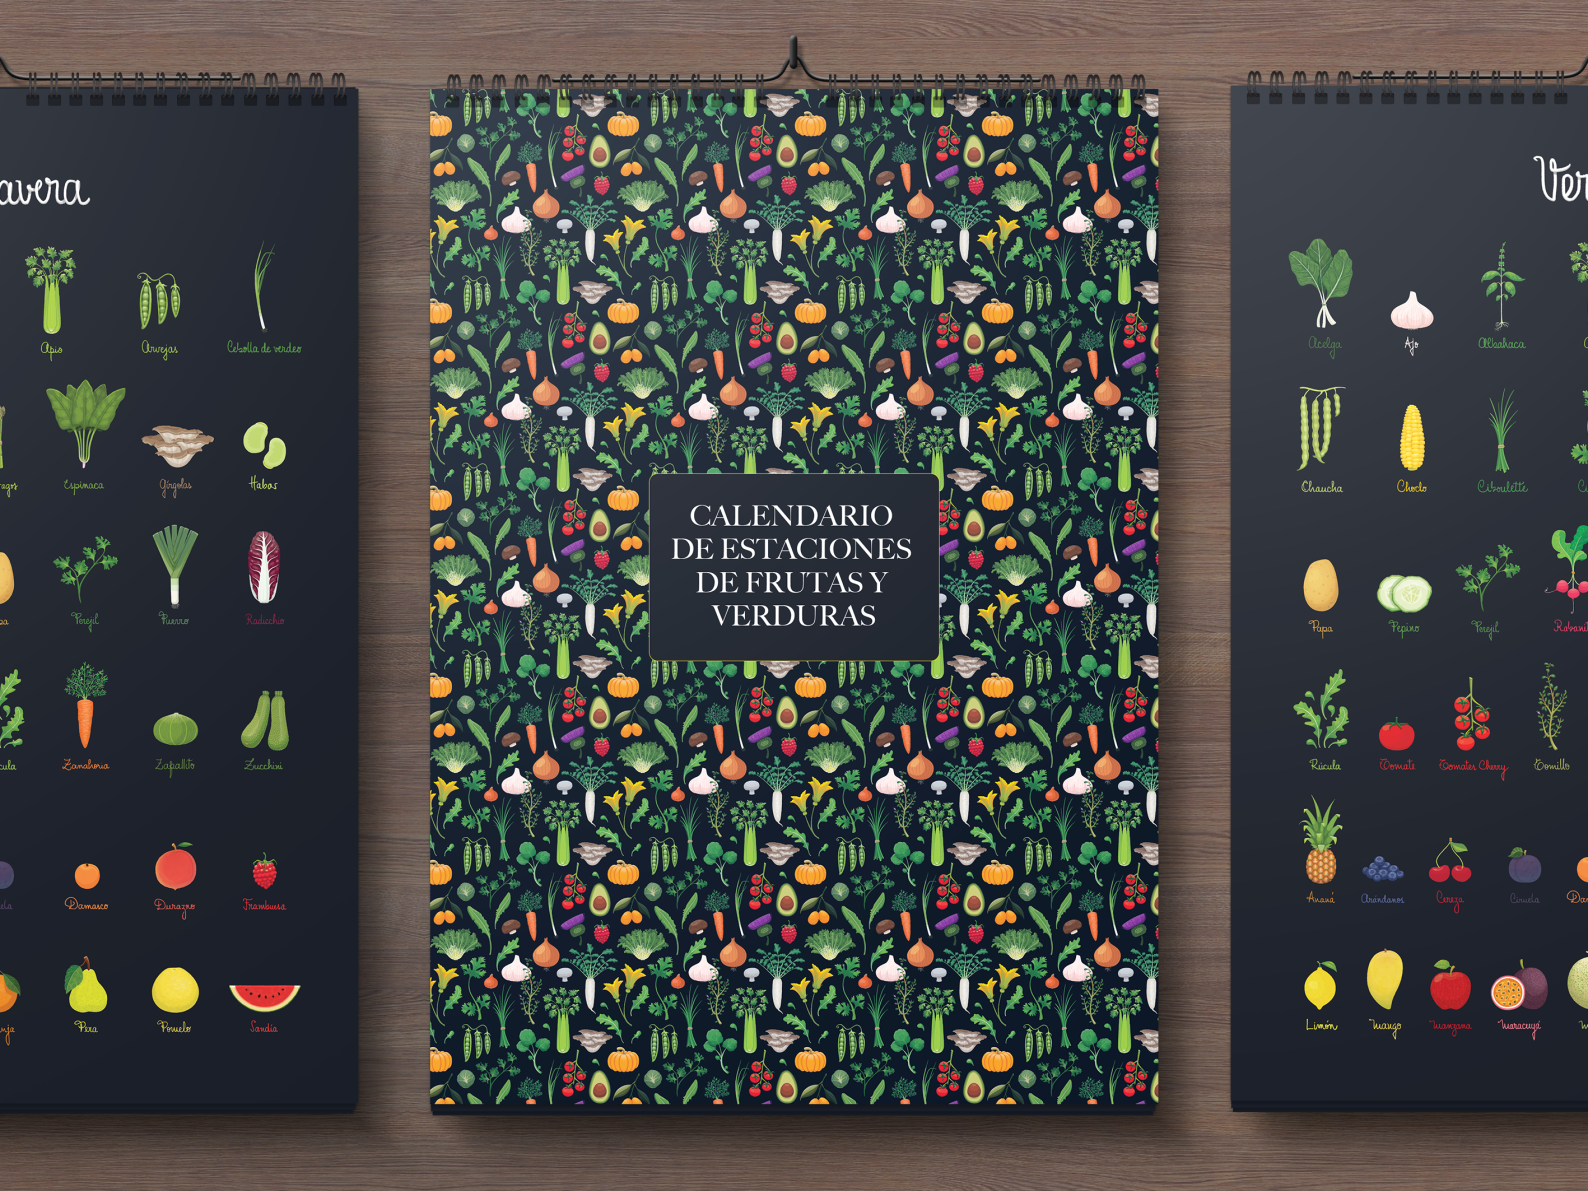 Fruits & Vegetables Seasonal Calendar by Flor Cebolla on Dribbble